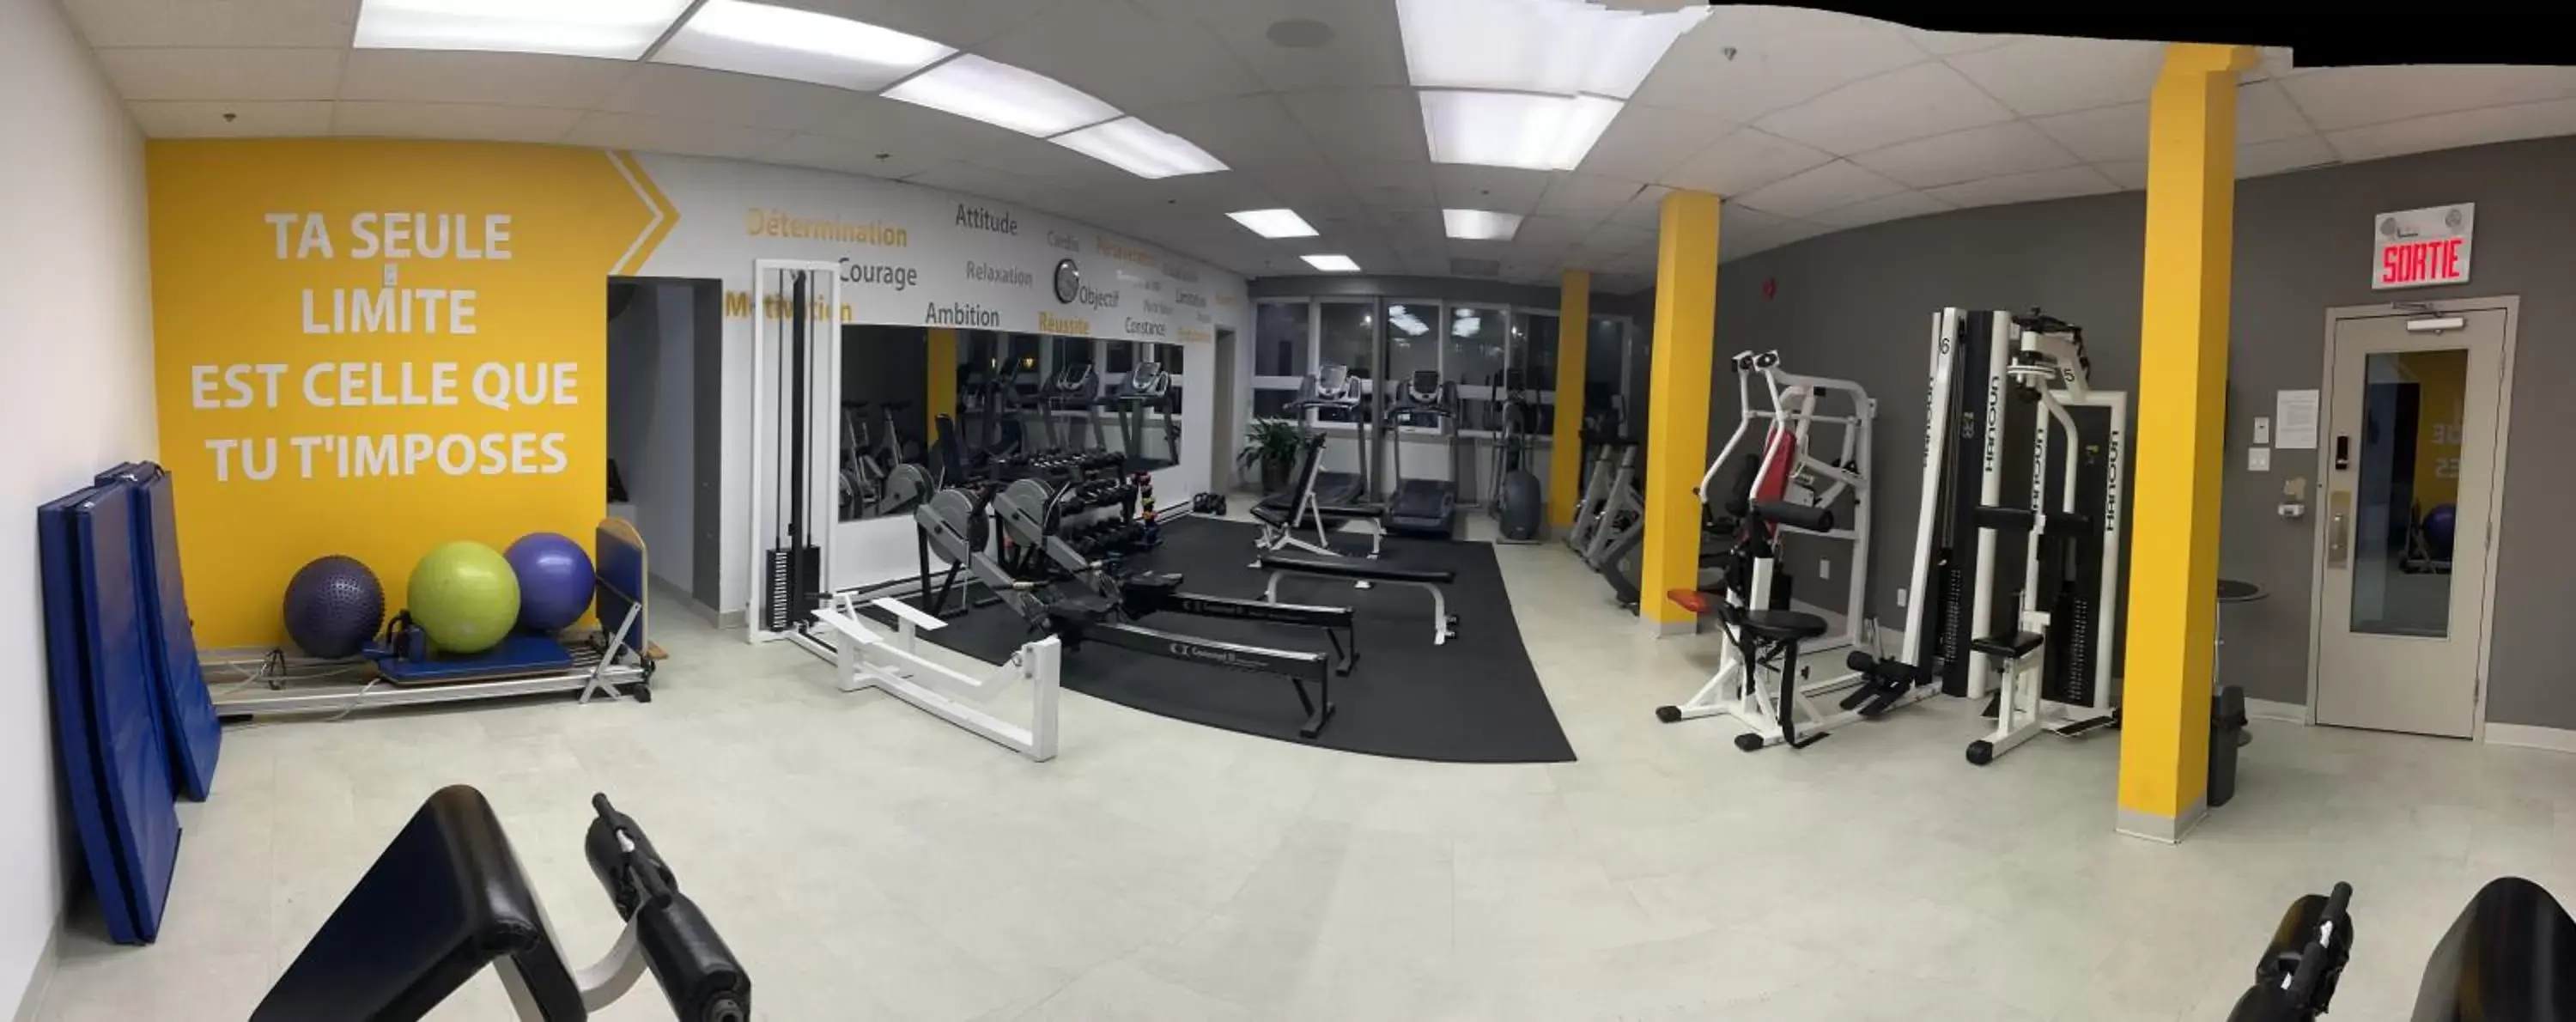 Fitness centre/facilities, Fitness Center/Facilities in Hôtel Sept-Îles